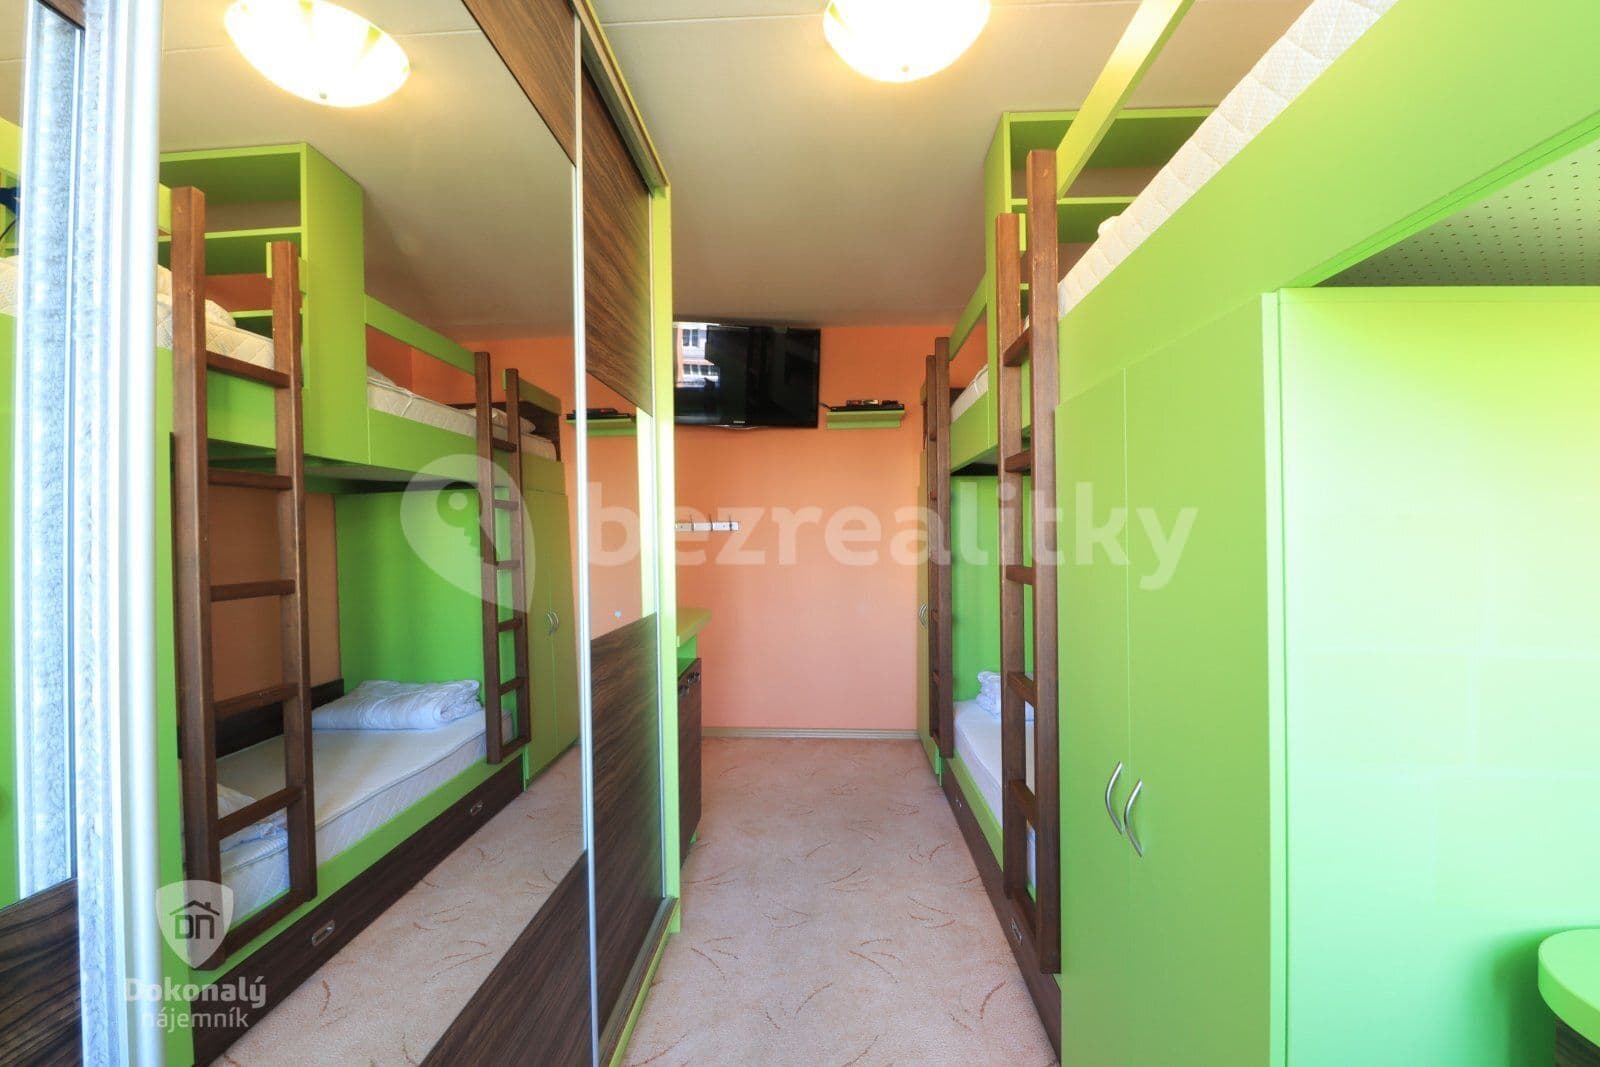 2 bedroom with open-plan kitchen flat to rent, 73 m², Nevanova, Prague, Prague